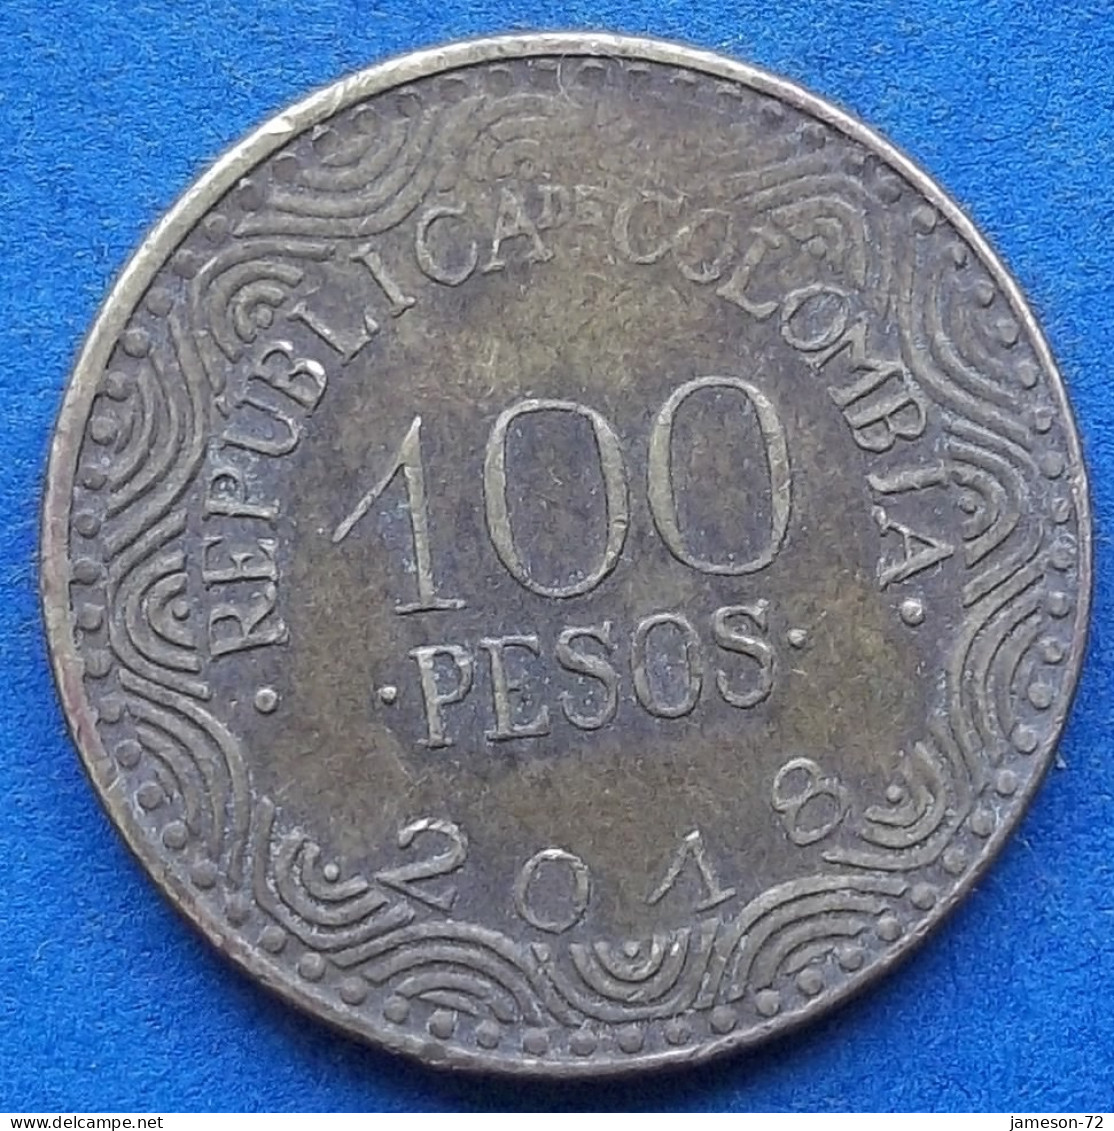 COLOMBIA - 100 Pesos 2018 "Frailejon" KM# 296 Republic - Edelweiss Coins - Colombia